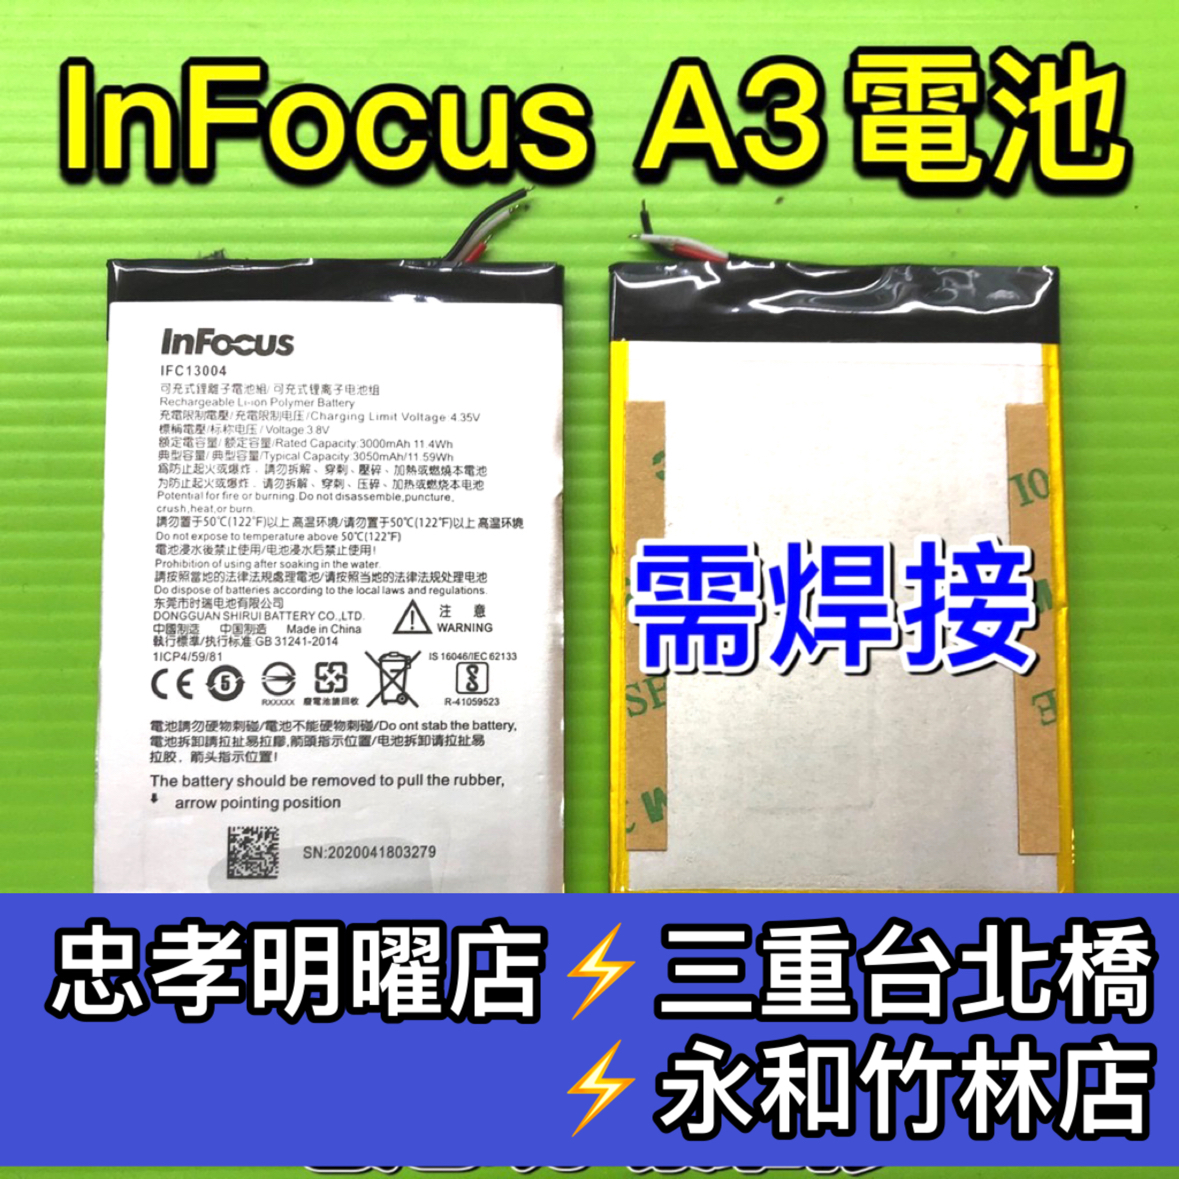 InFocus A3 電池 富可視 A3 電池維修 電池更換 換電池